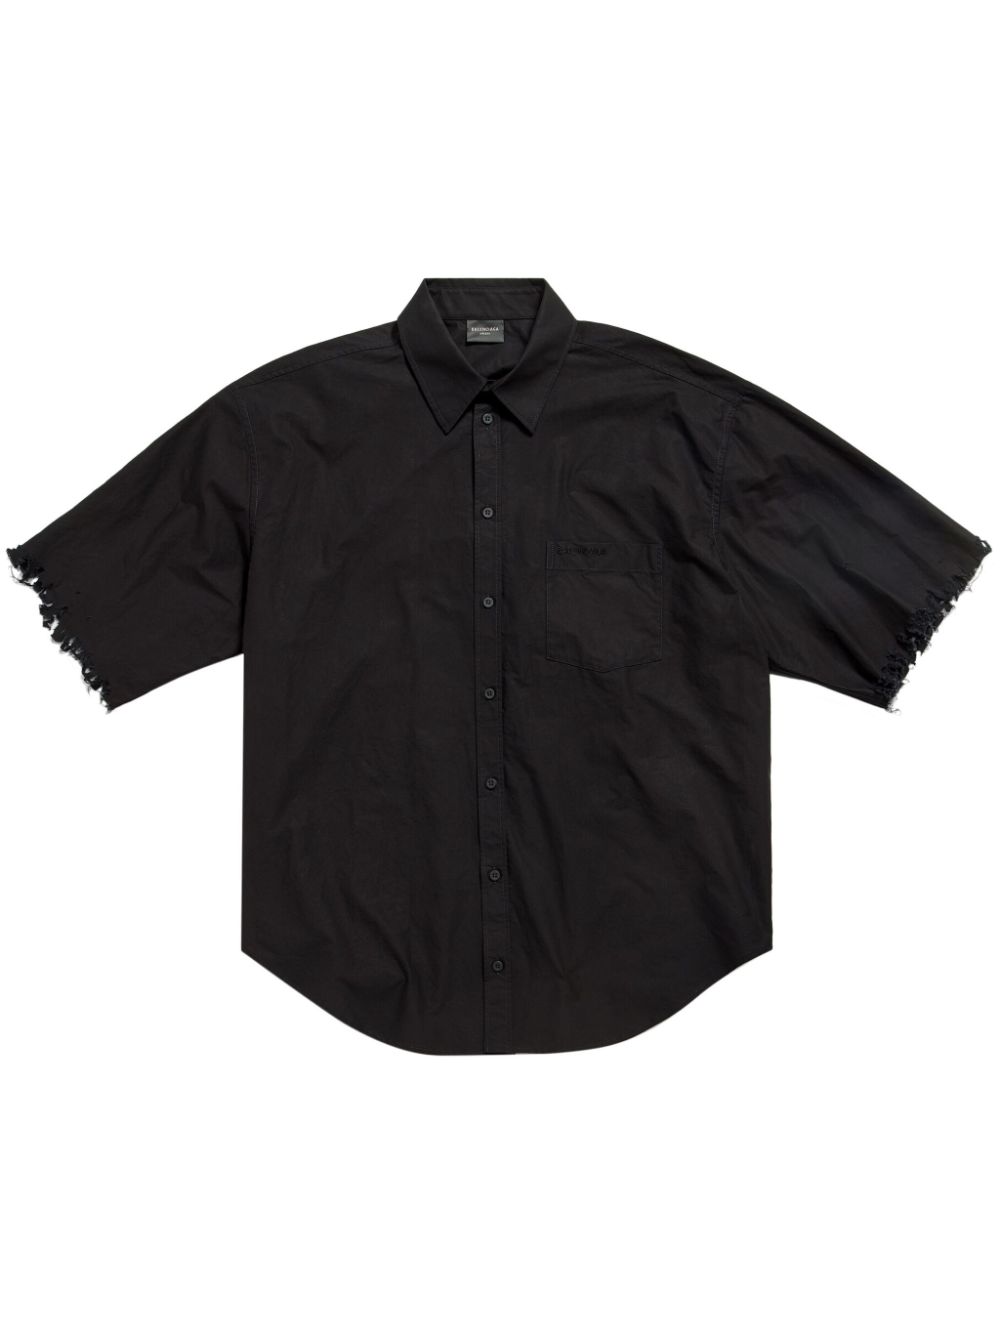 Balenciaga Distressed Cotton Shirt In Black